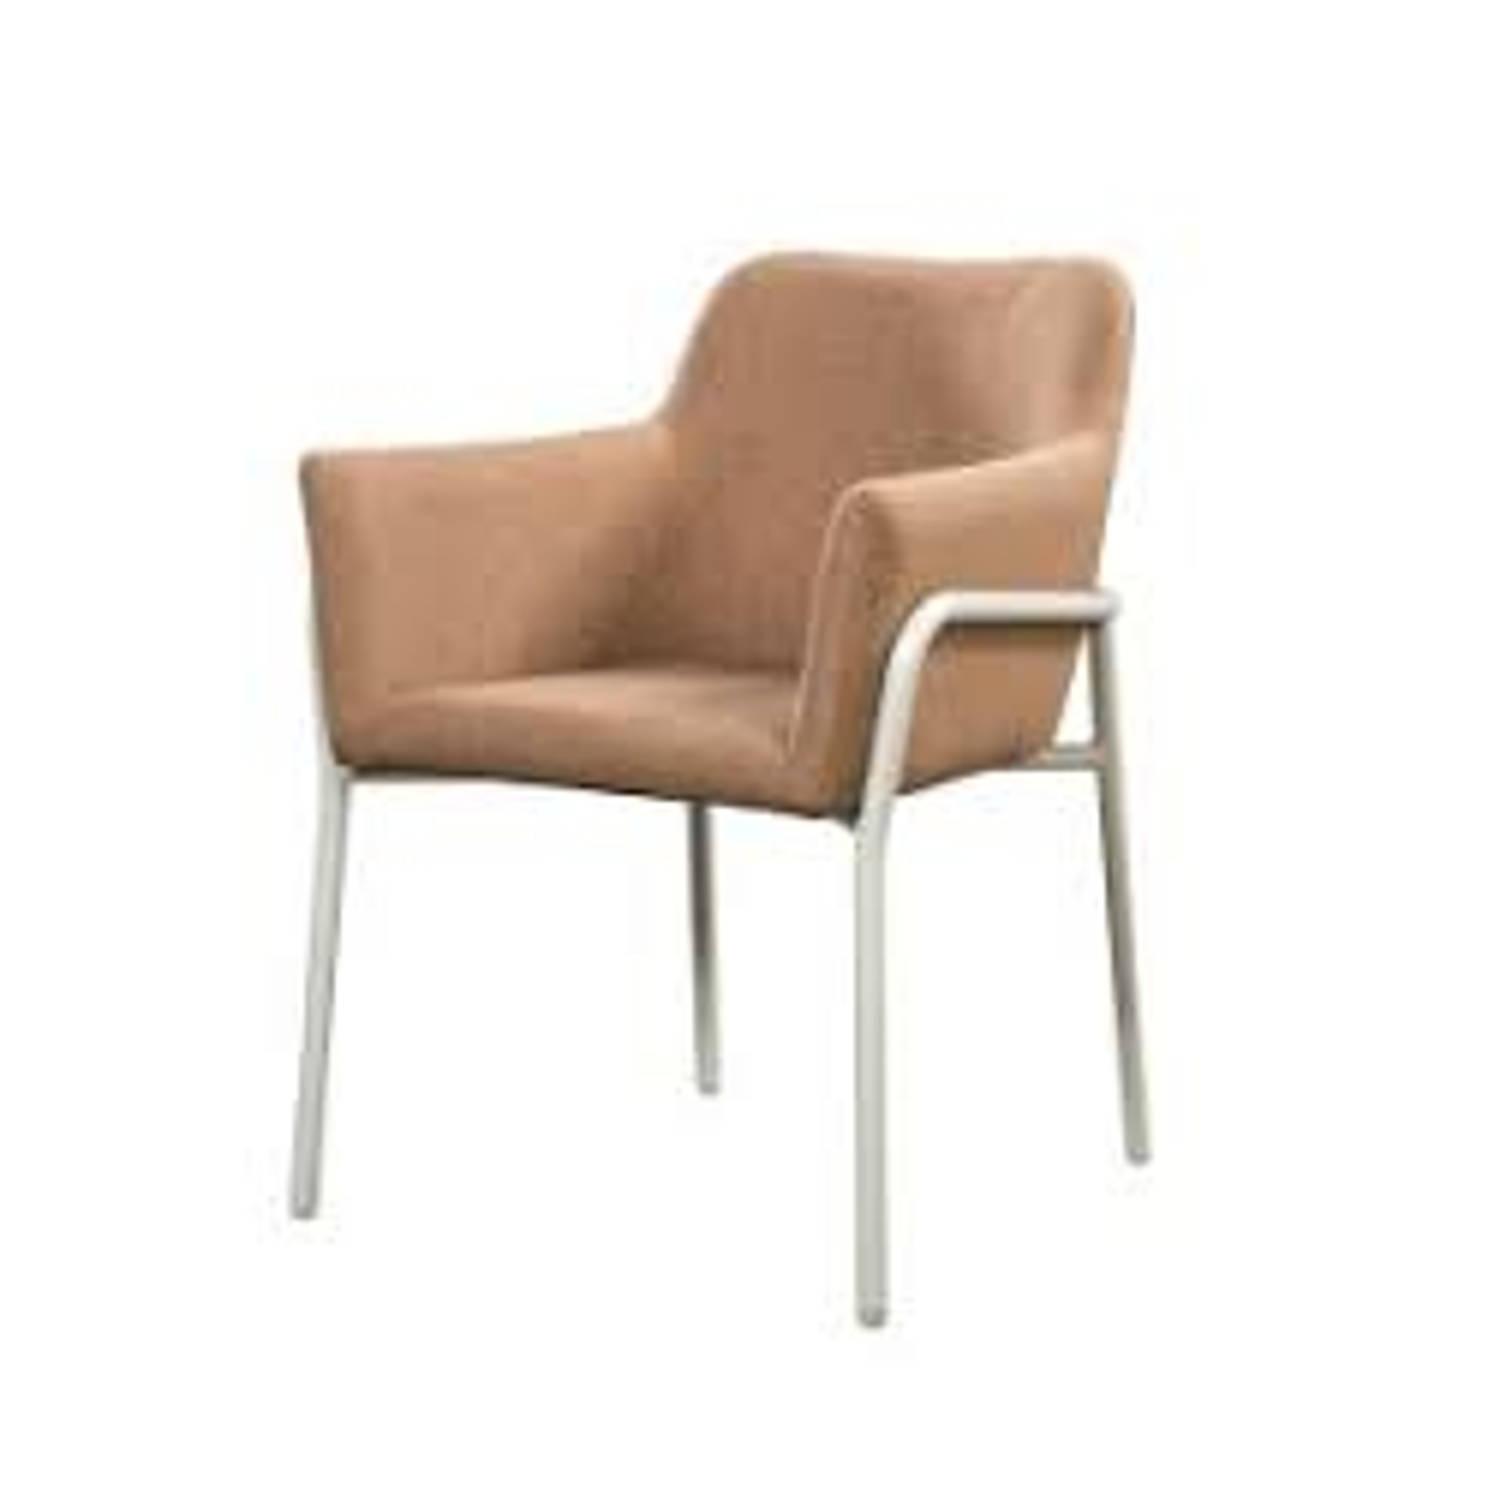 Yoi - Take dining chair aluminium salix/wheat